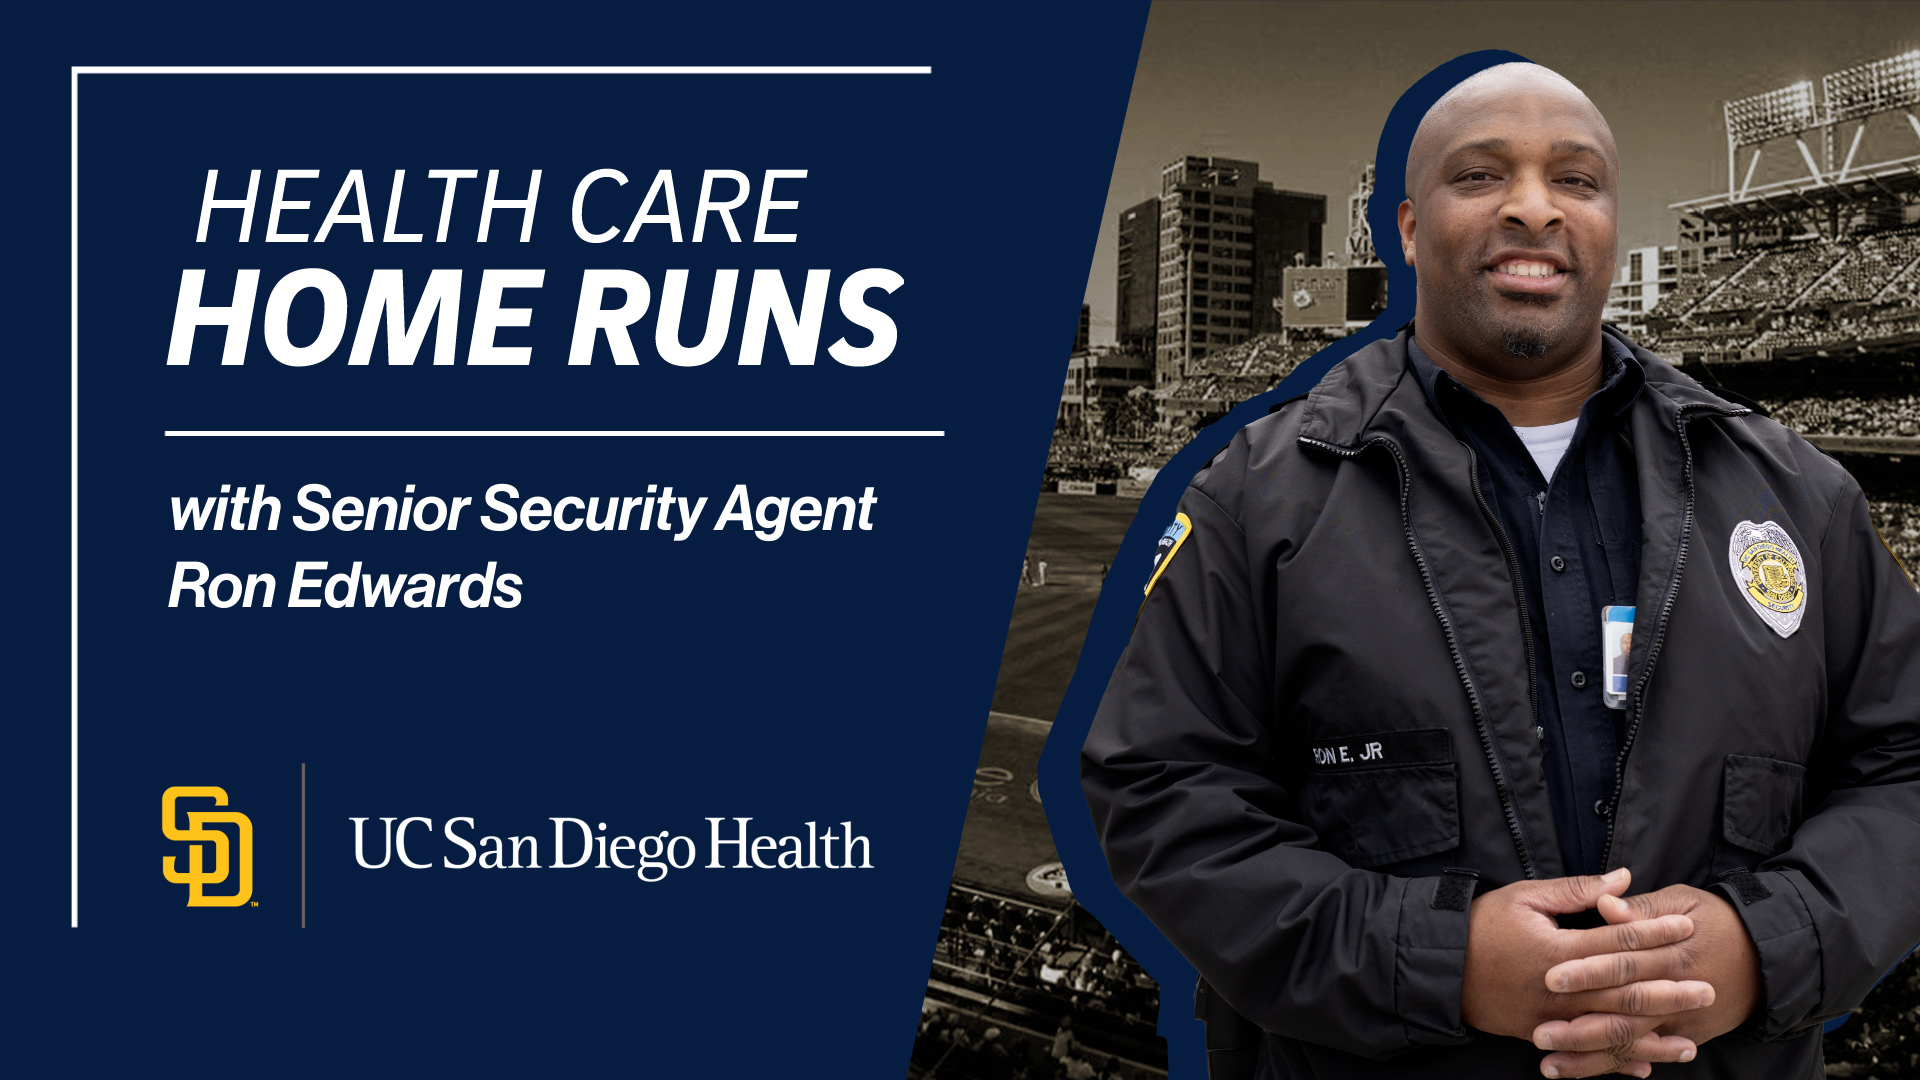 UC San Diego Health security agent Ron Edwards